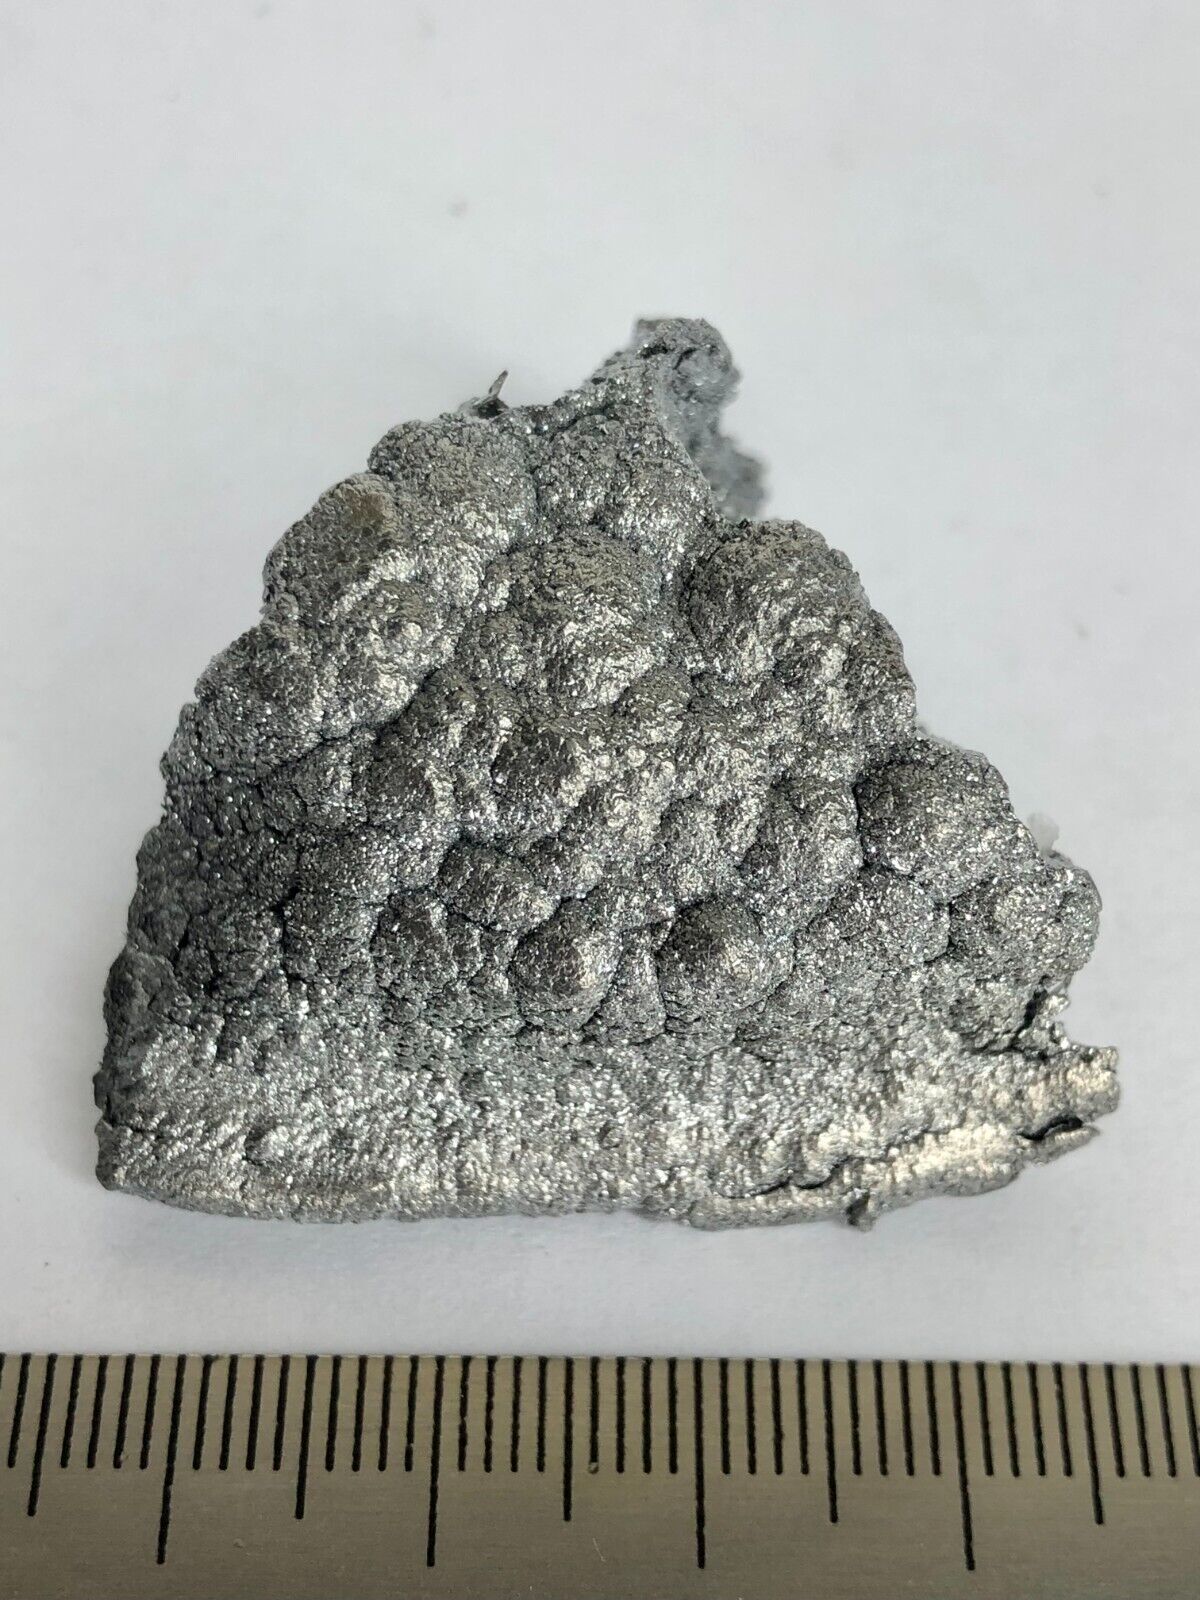 Thulium Metal 131 Gram Tm/TREM 99.99% Purity Element Crystalline on the Picture